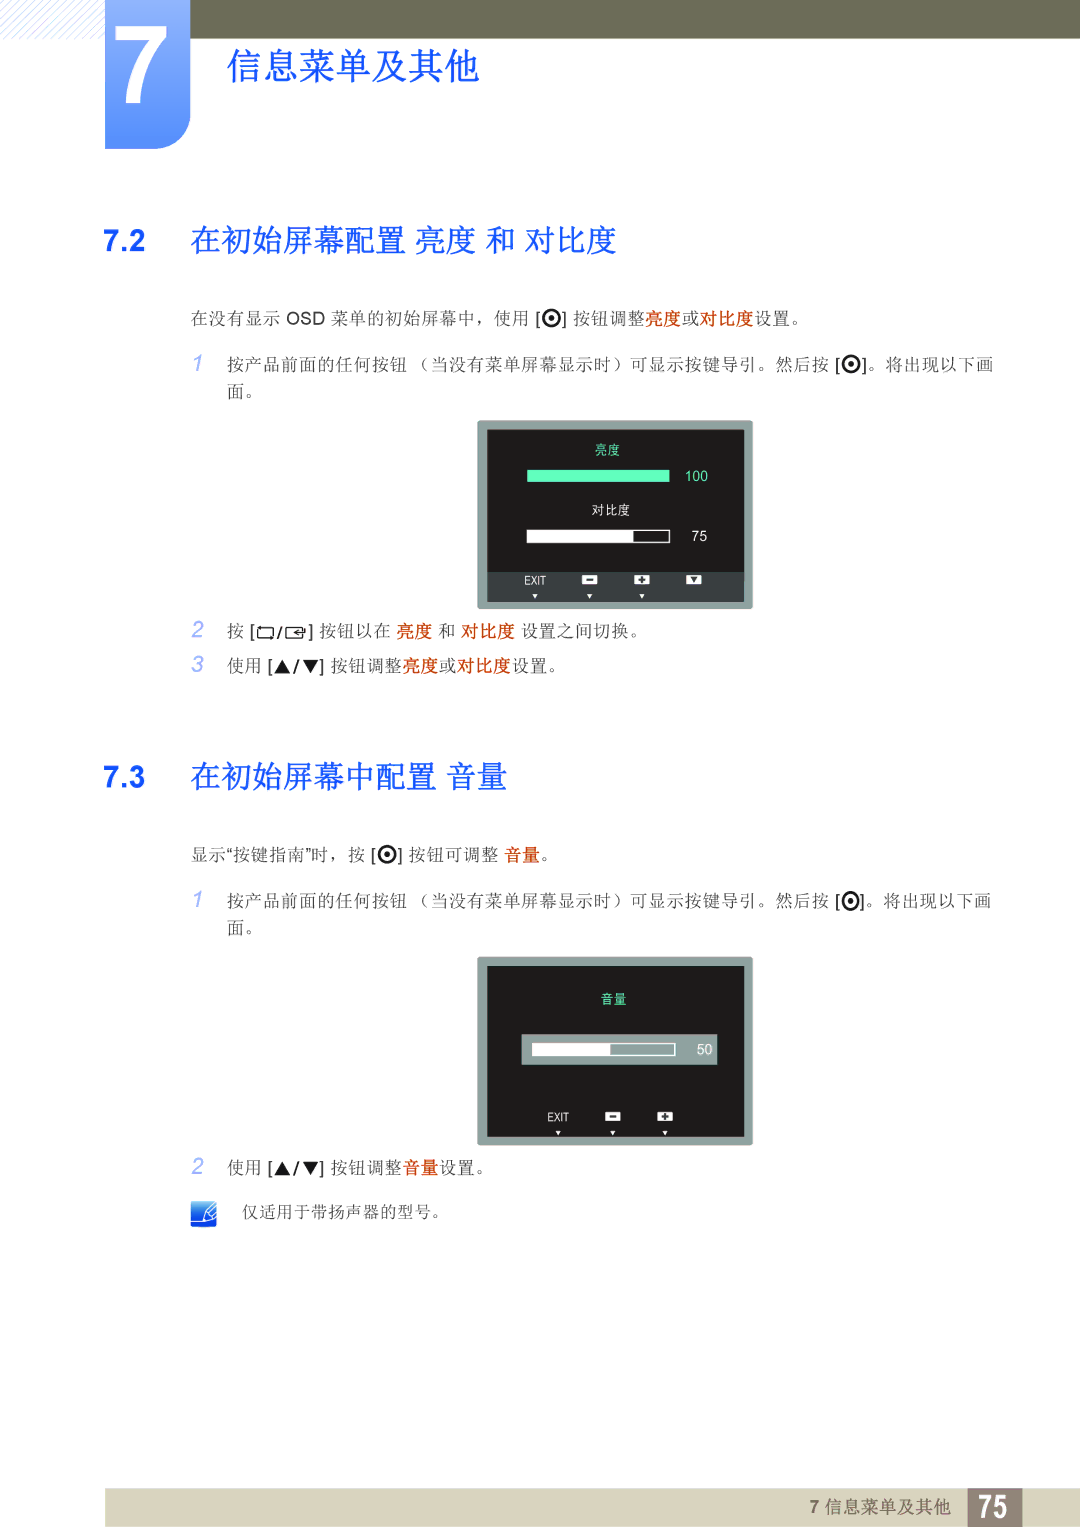 Samsung LS27C65UXS/EN, LS24C65KMWG/EN, LS24C65UXWF/EN, LS24C65KBWV/EN, LS24C65UDW/EN manual 在初始屏幕配置 亮度 和 对比度, 在初始屏幕中配置 音量 